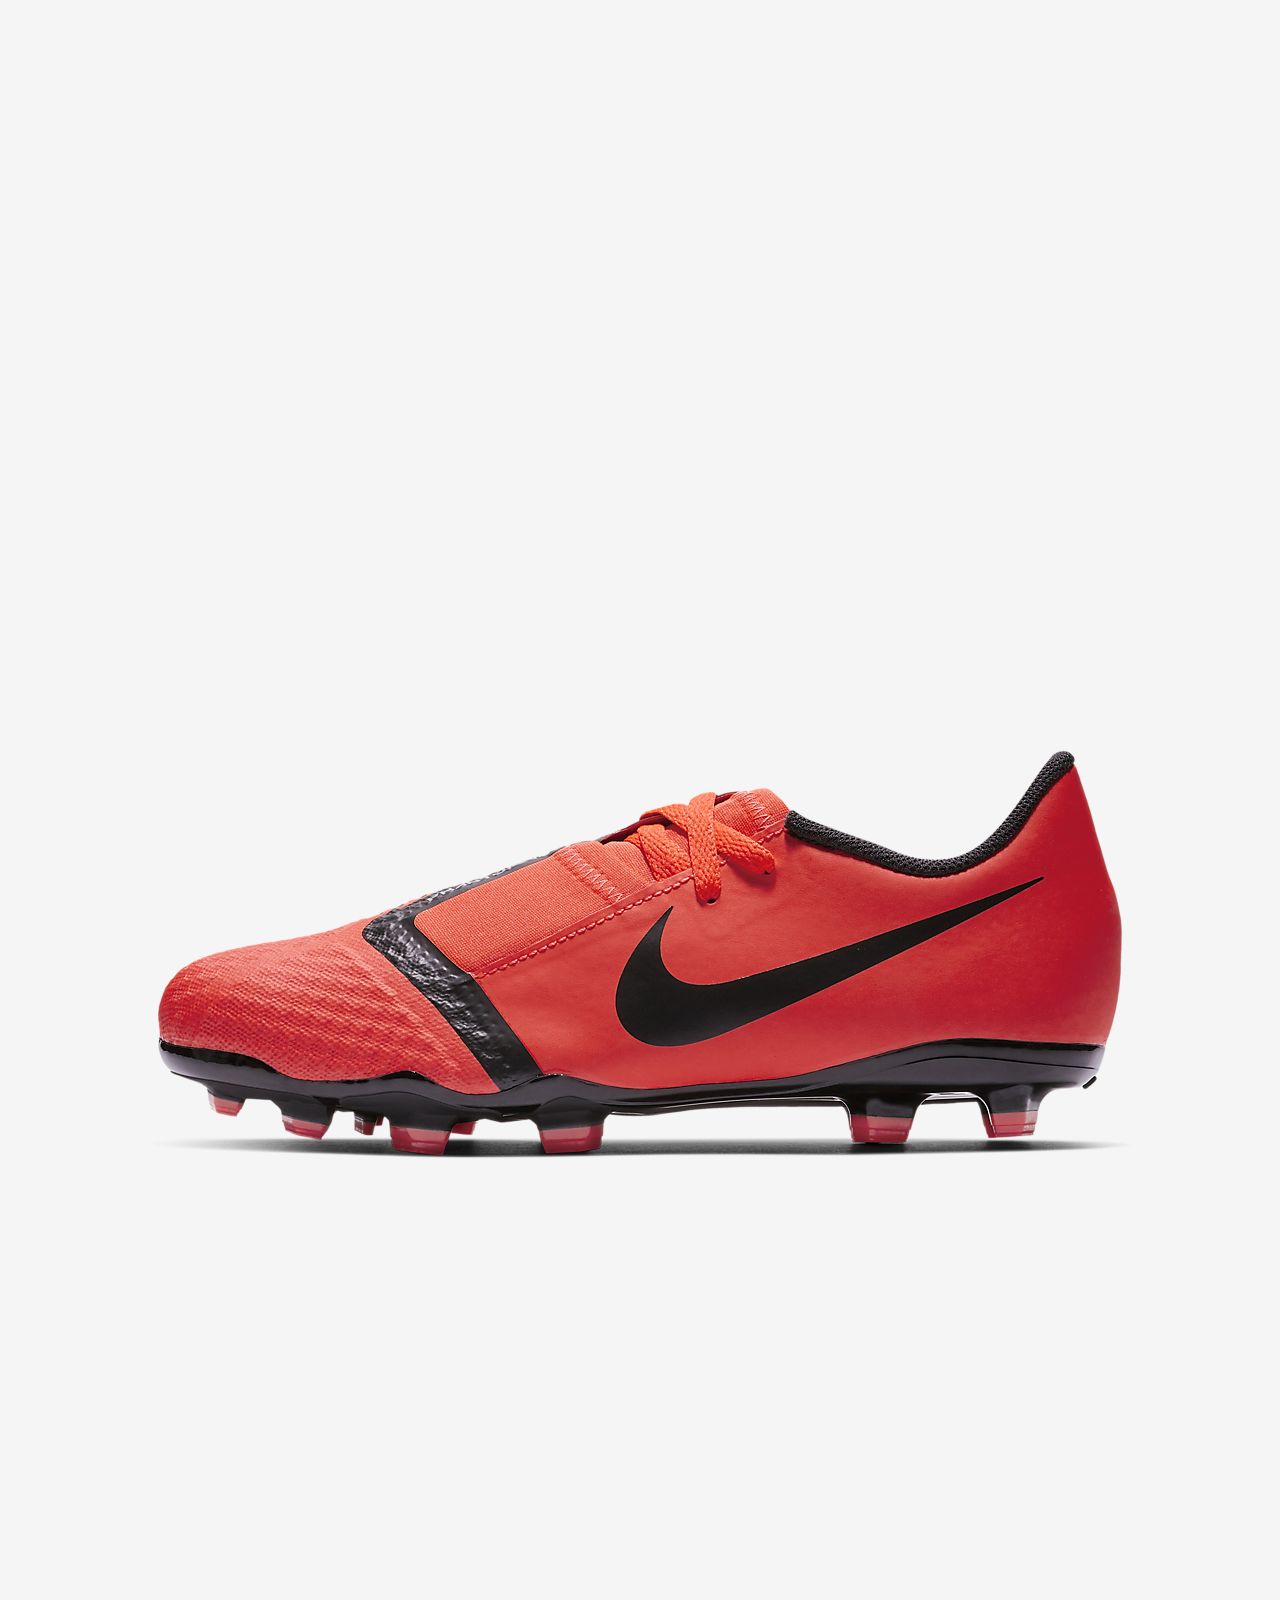 Nike Football Boots Size 8.5 11 Nike Phantom VNM . eBay